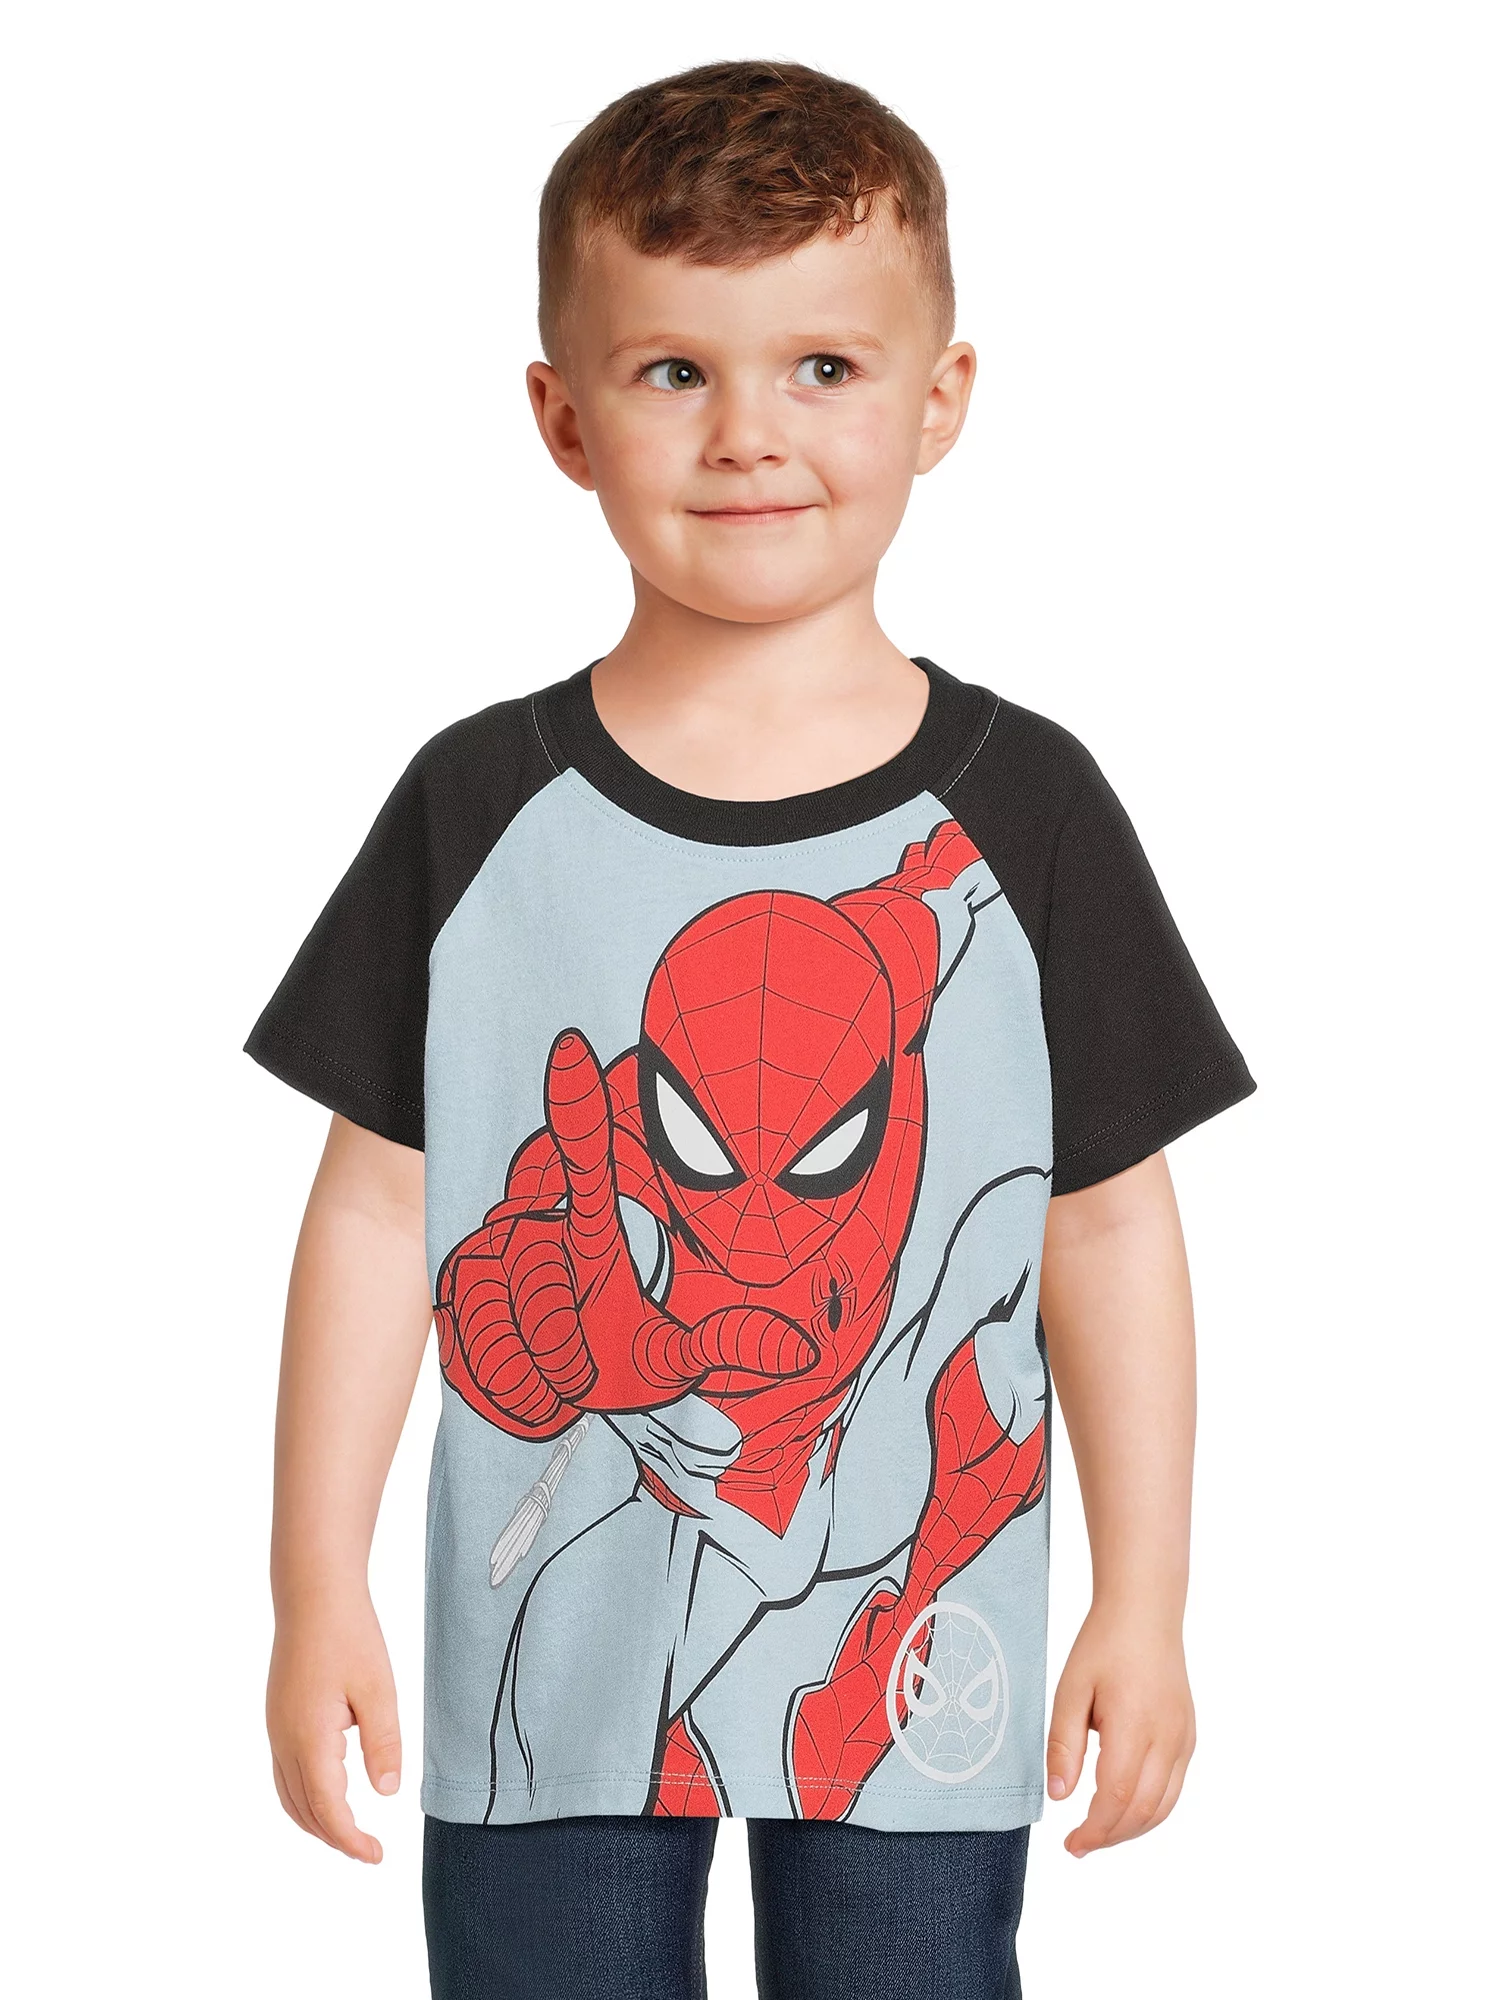 Spider-Man Toddler Boys Tee, Sizes 12M-5T